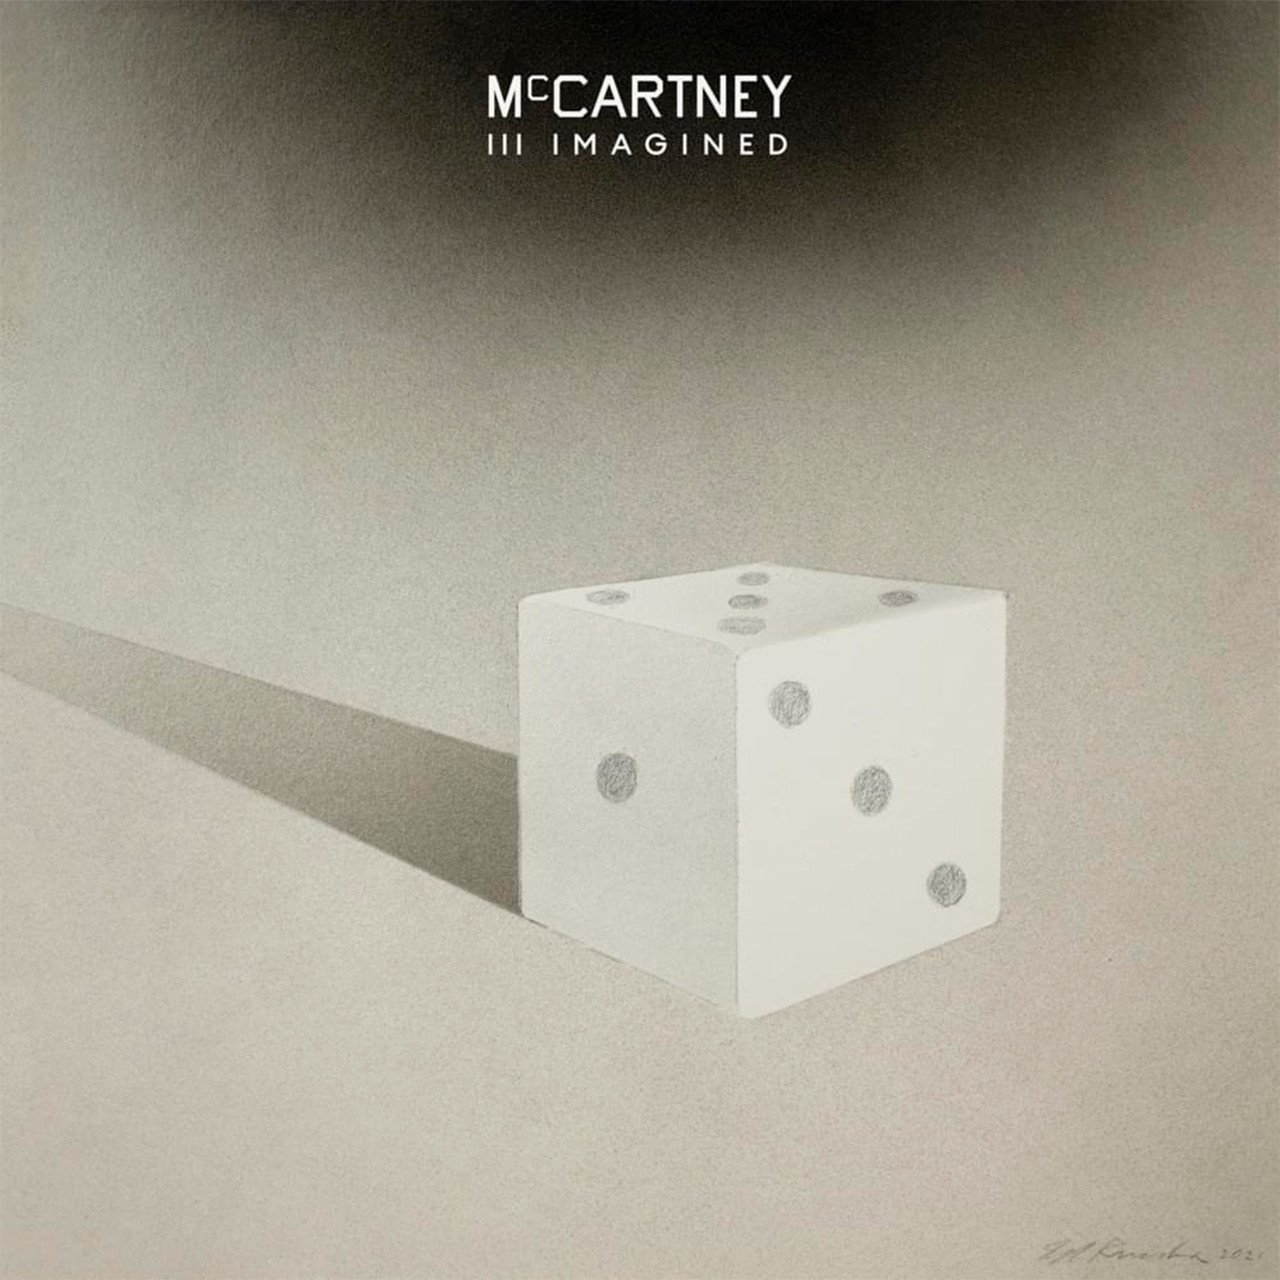 Рок Capitol US Paul McCartney - McCartney III Imagined рок capitol us paul mccartney egypt station